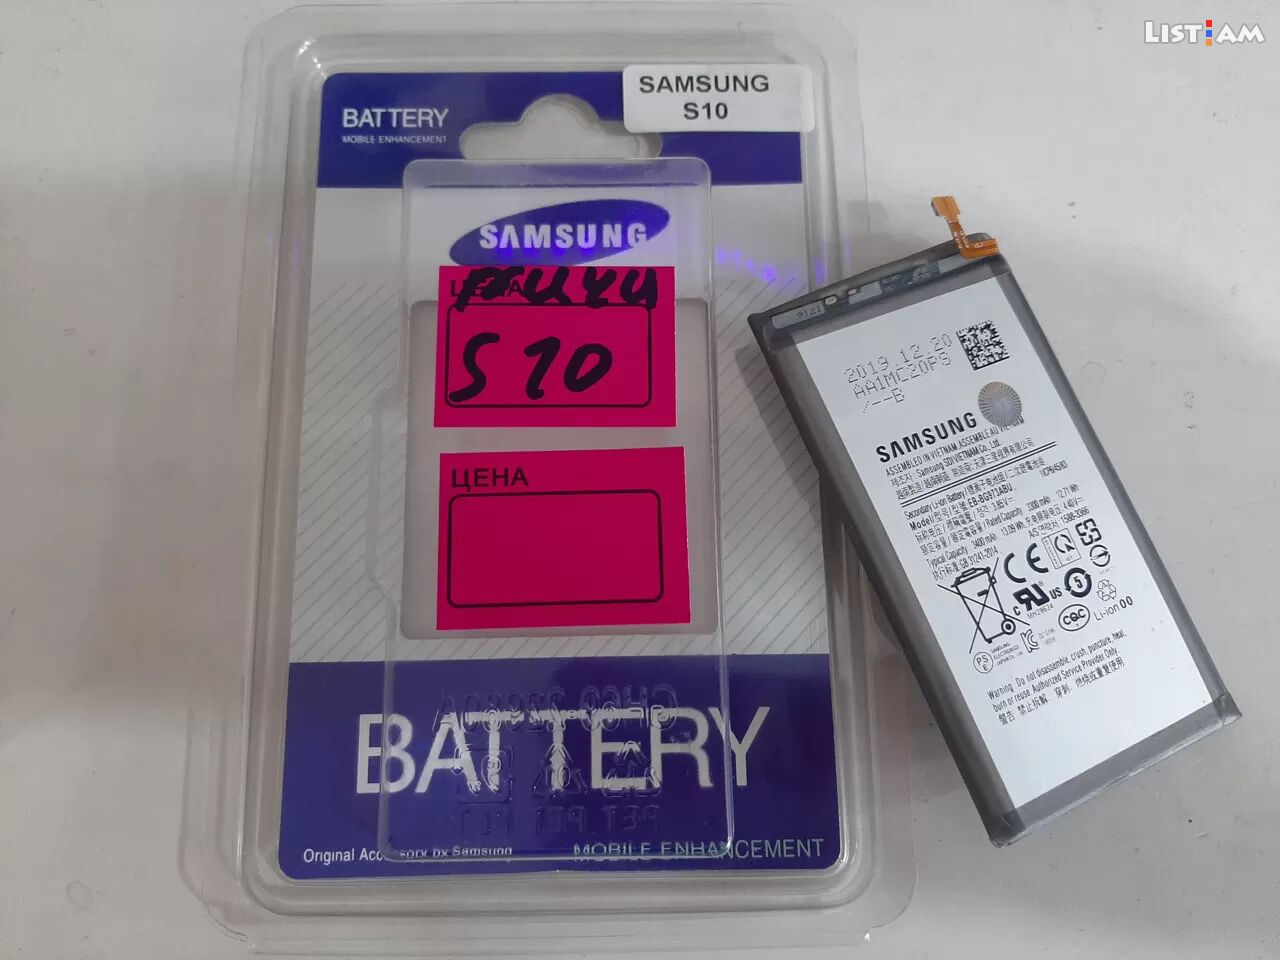 Galaxy s10 battery